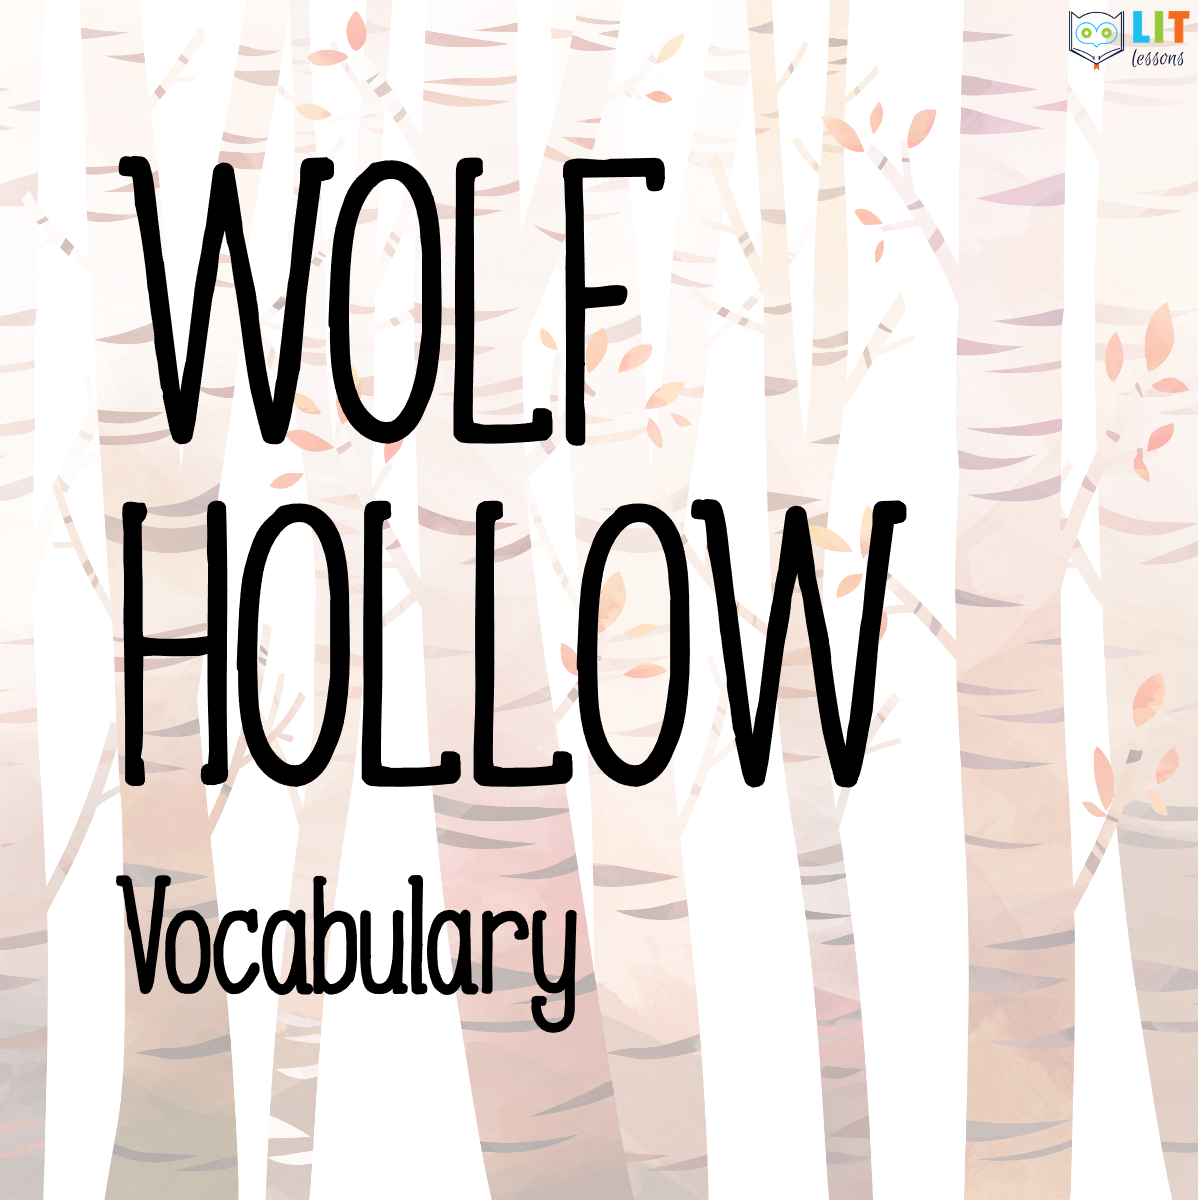 Wolf Hollow Vocabulary